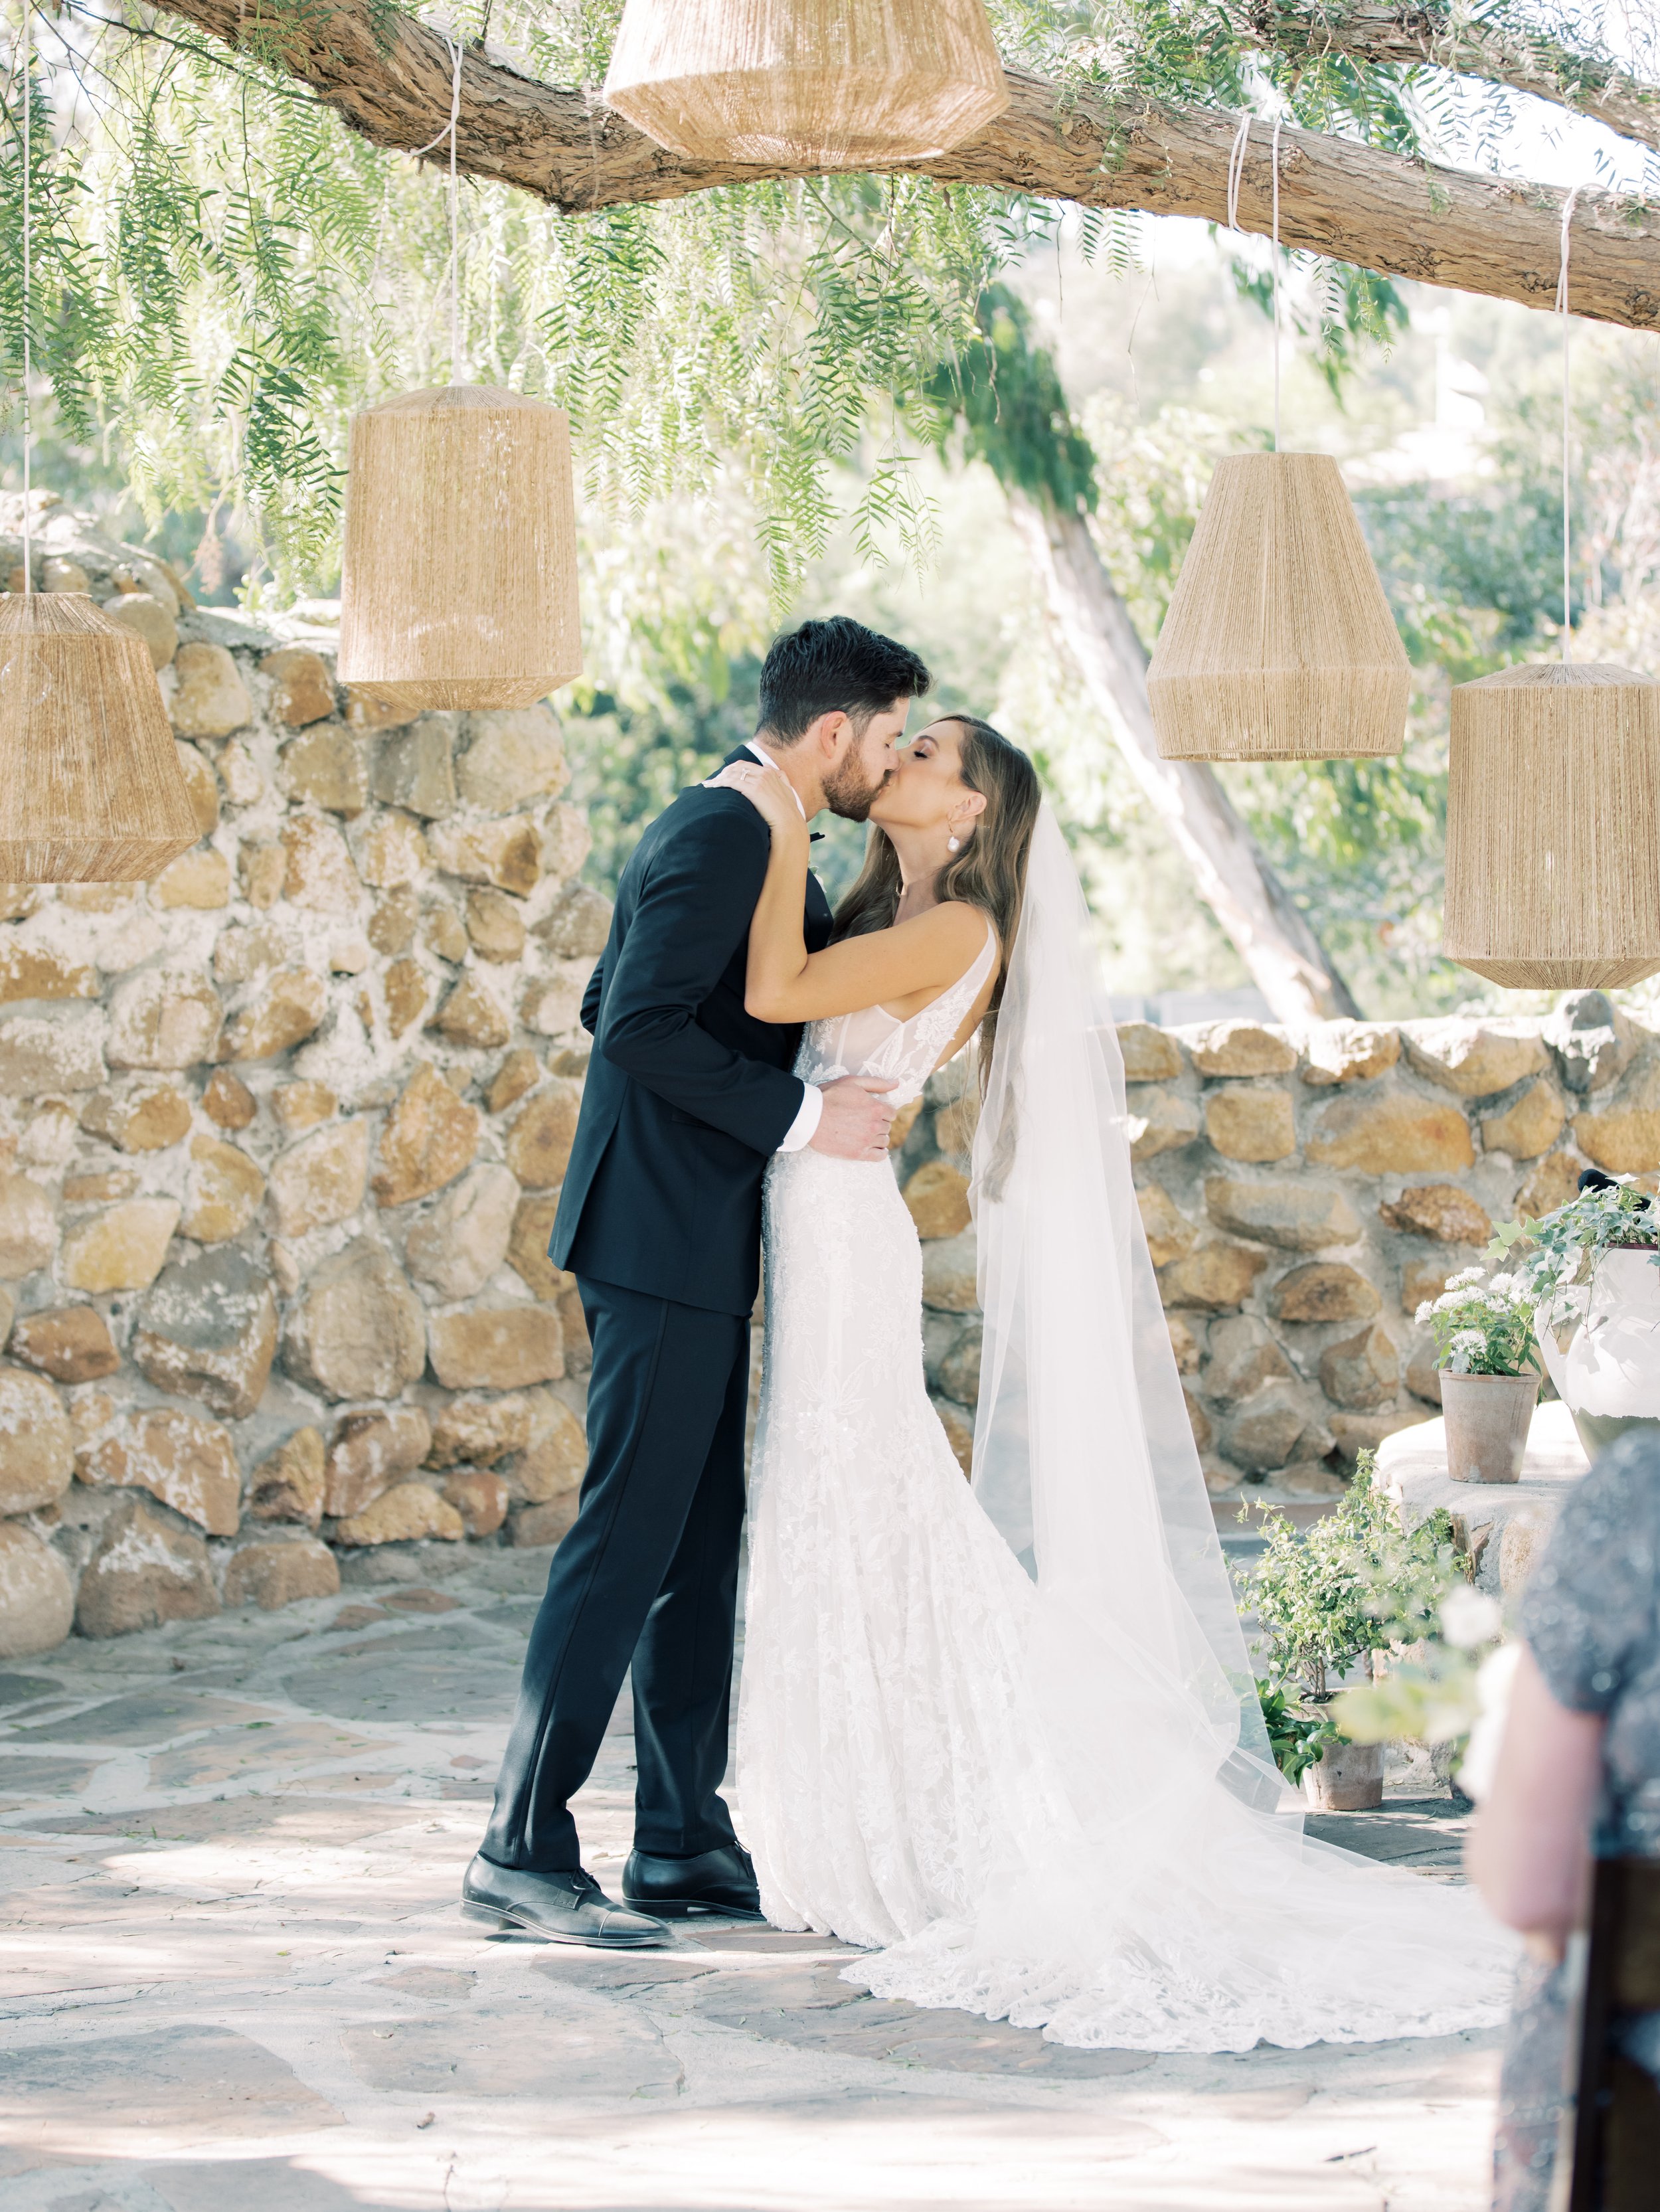 Ceremony - Austin + Alexis' Wedding - Natalie Schutt Photography-105.jpg